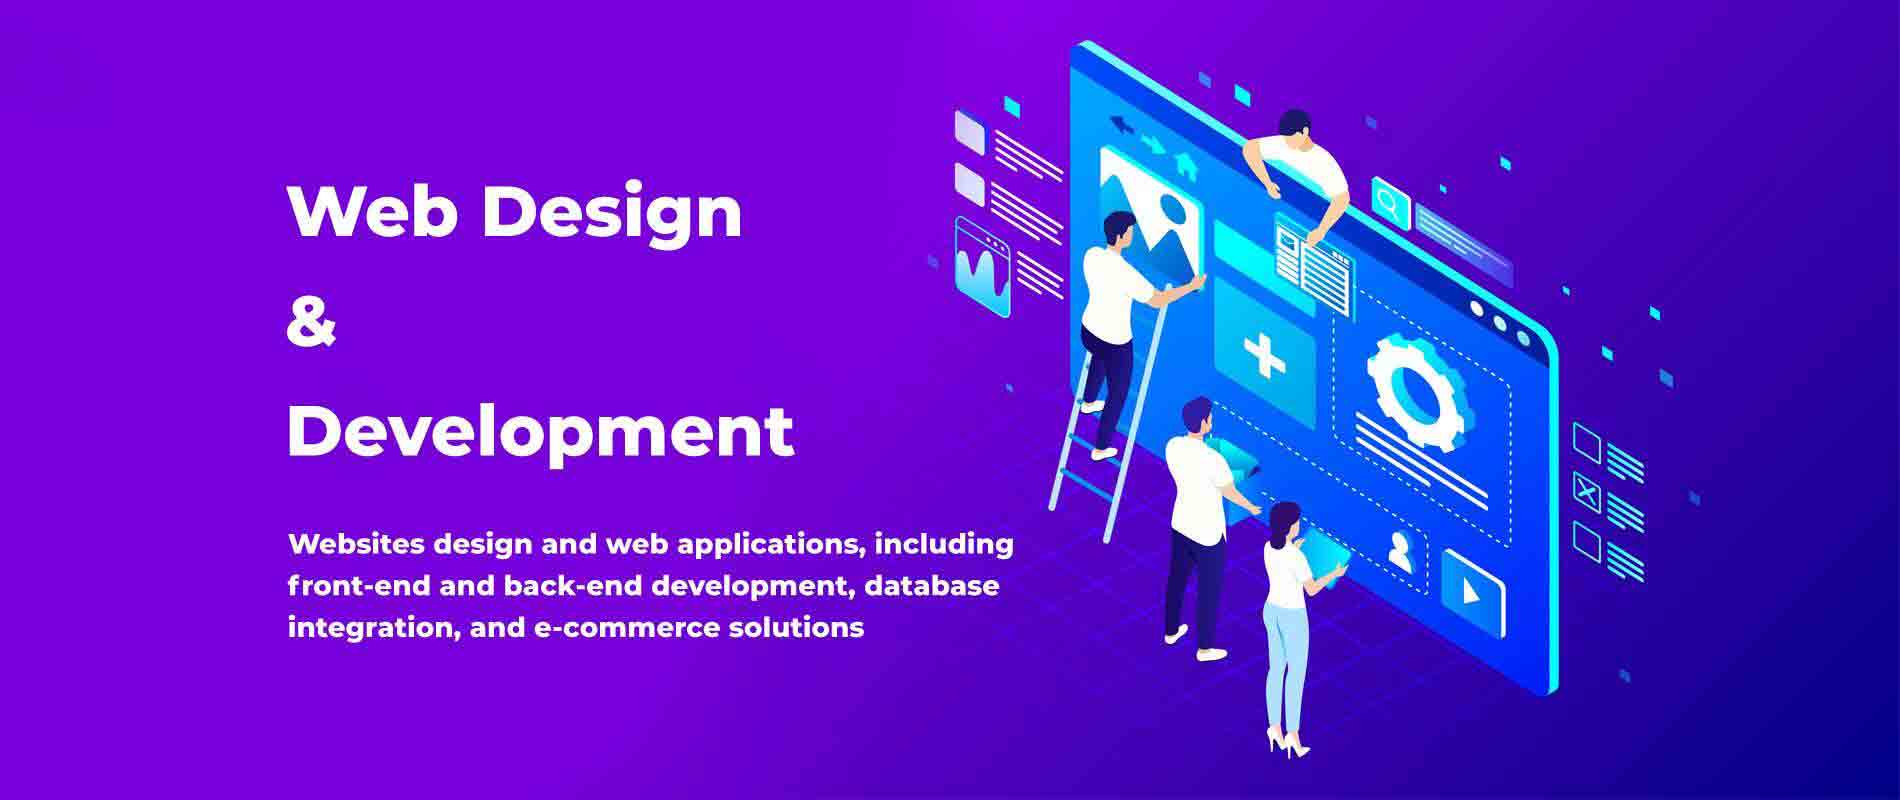 Web Design & Development by Deosoft